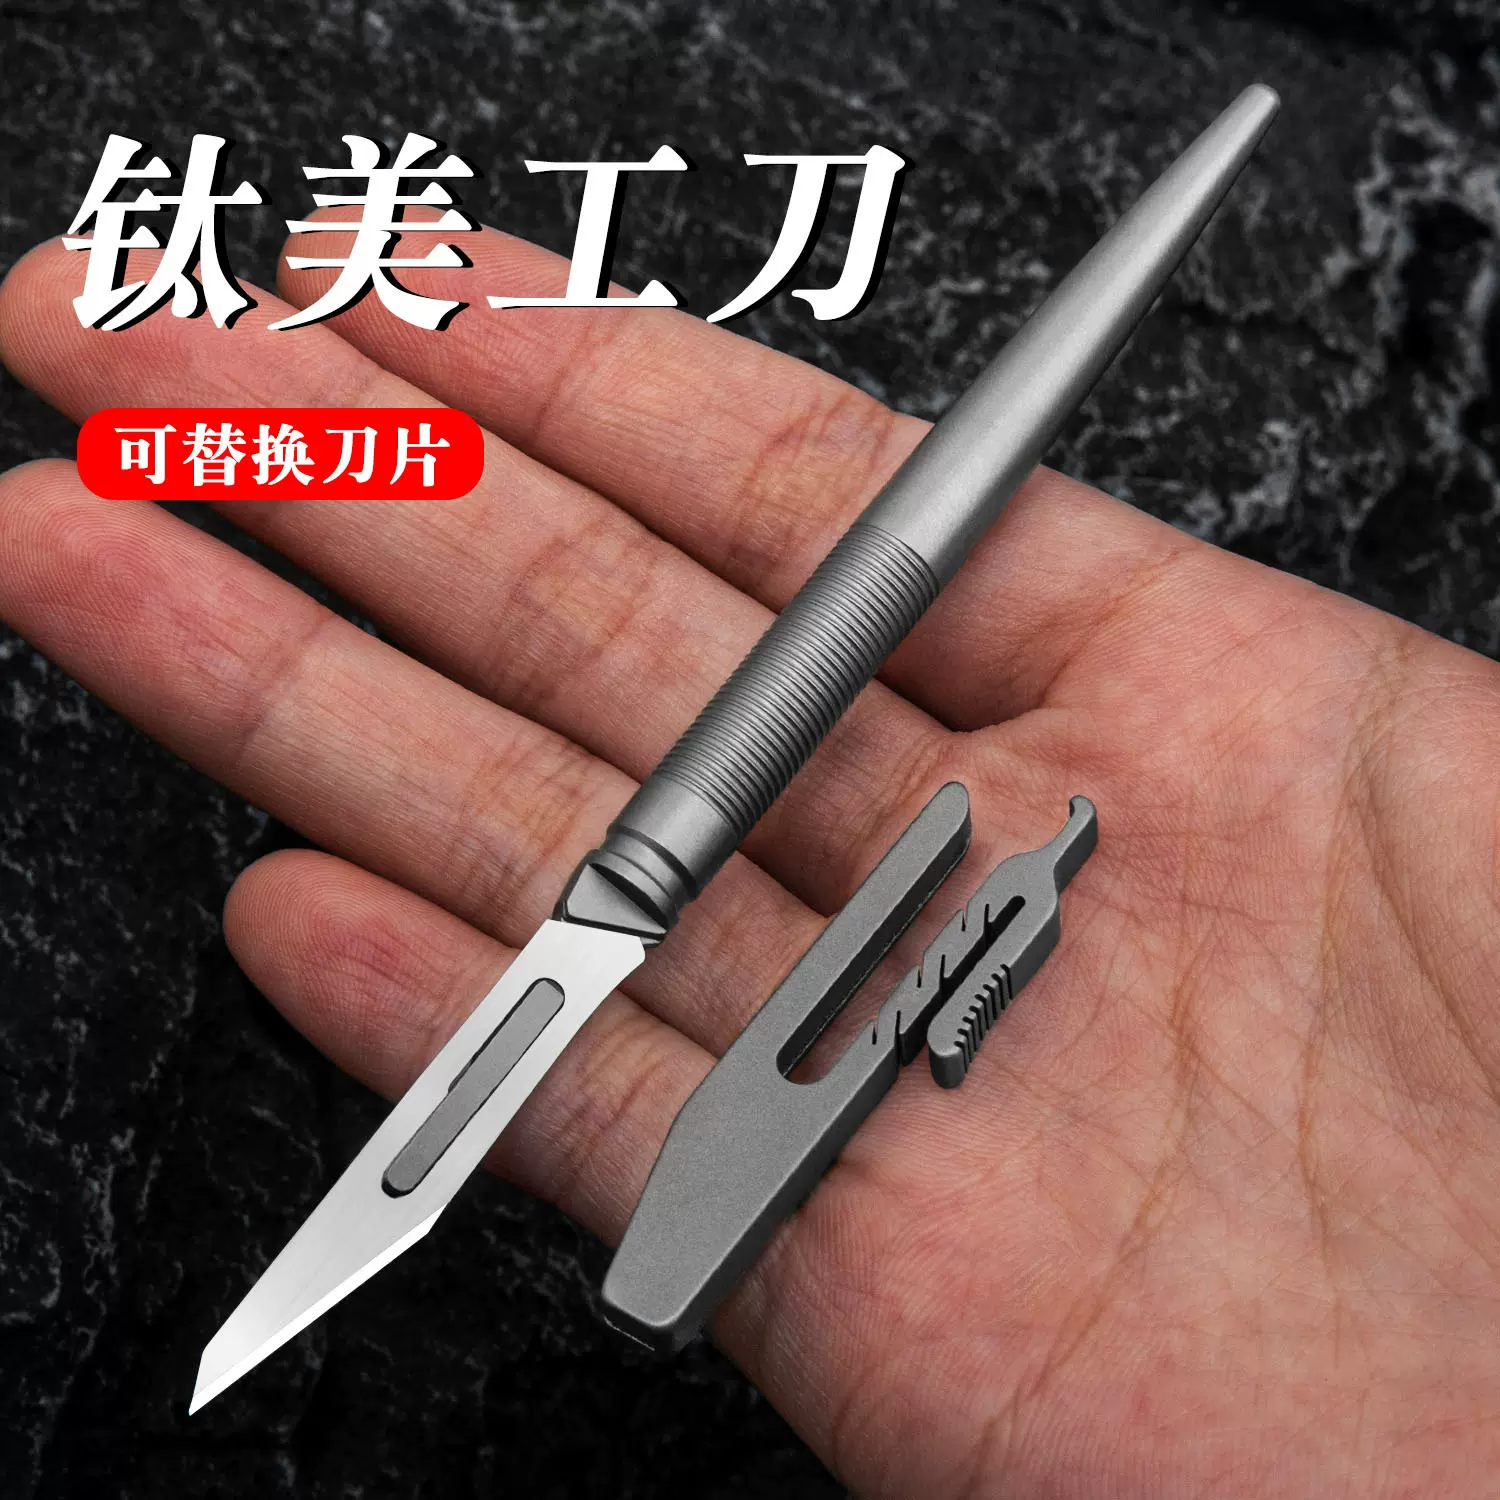 FK35鈦合金裁紙刀11號刀片一體刀柄EDC可攜式美工刀貼膜工具快遞刀-Taobao